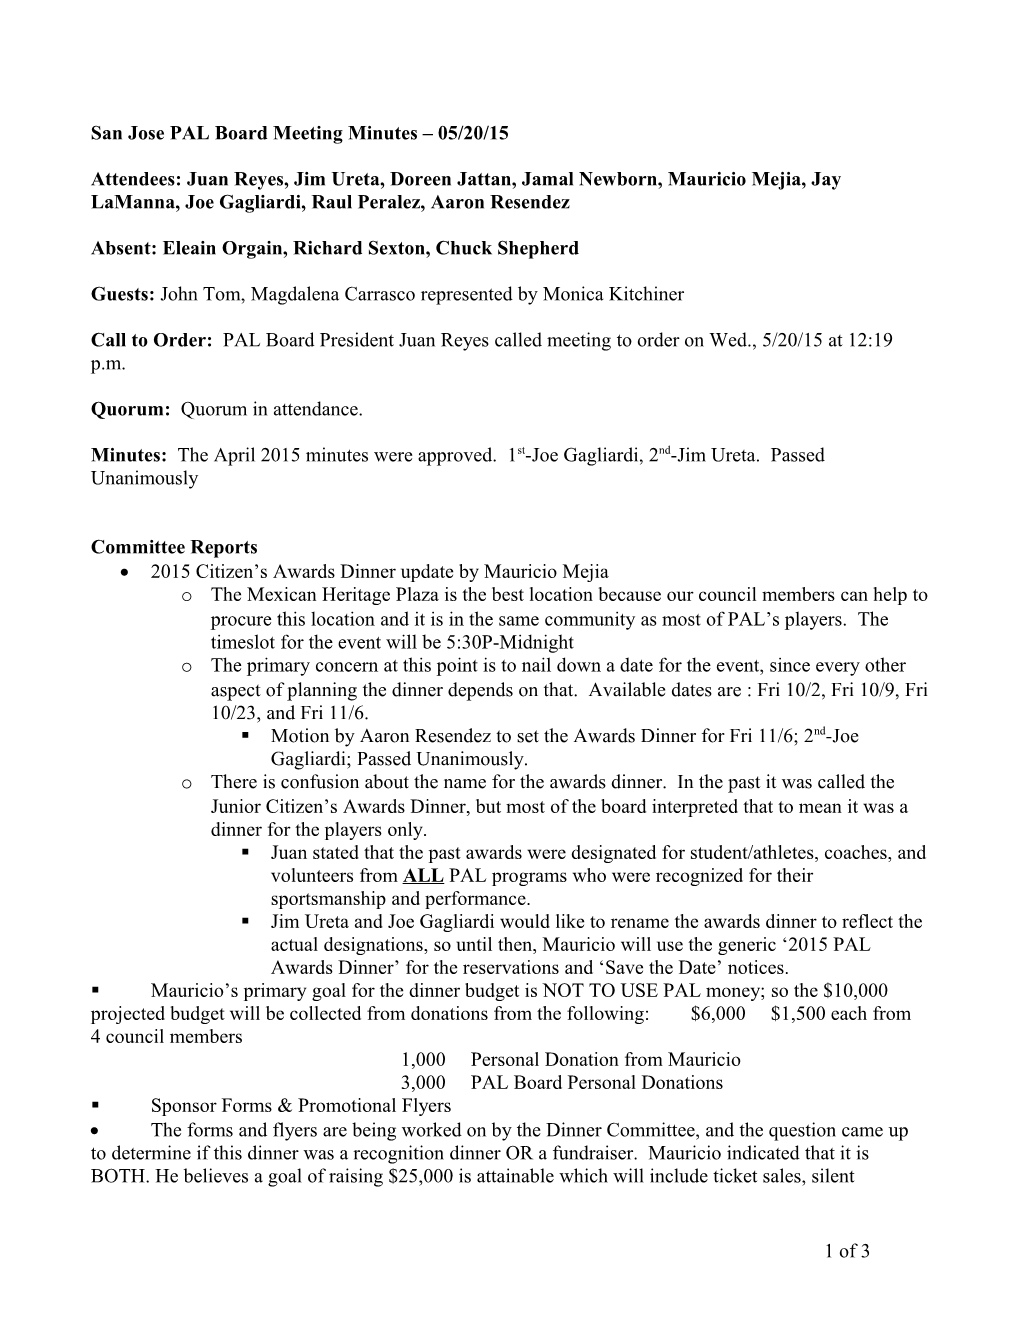 San Jose PAL Board Meeting Minutes 04/29/2014